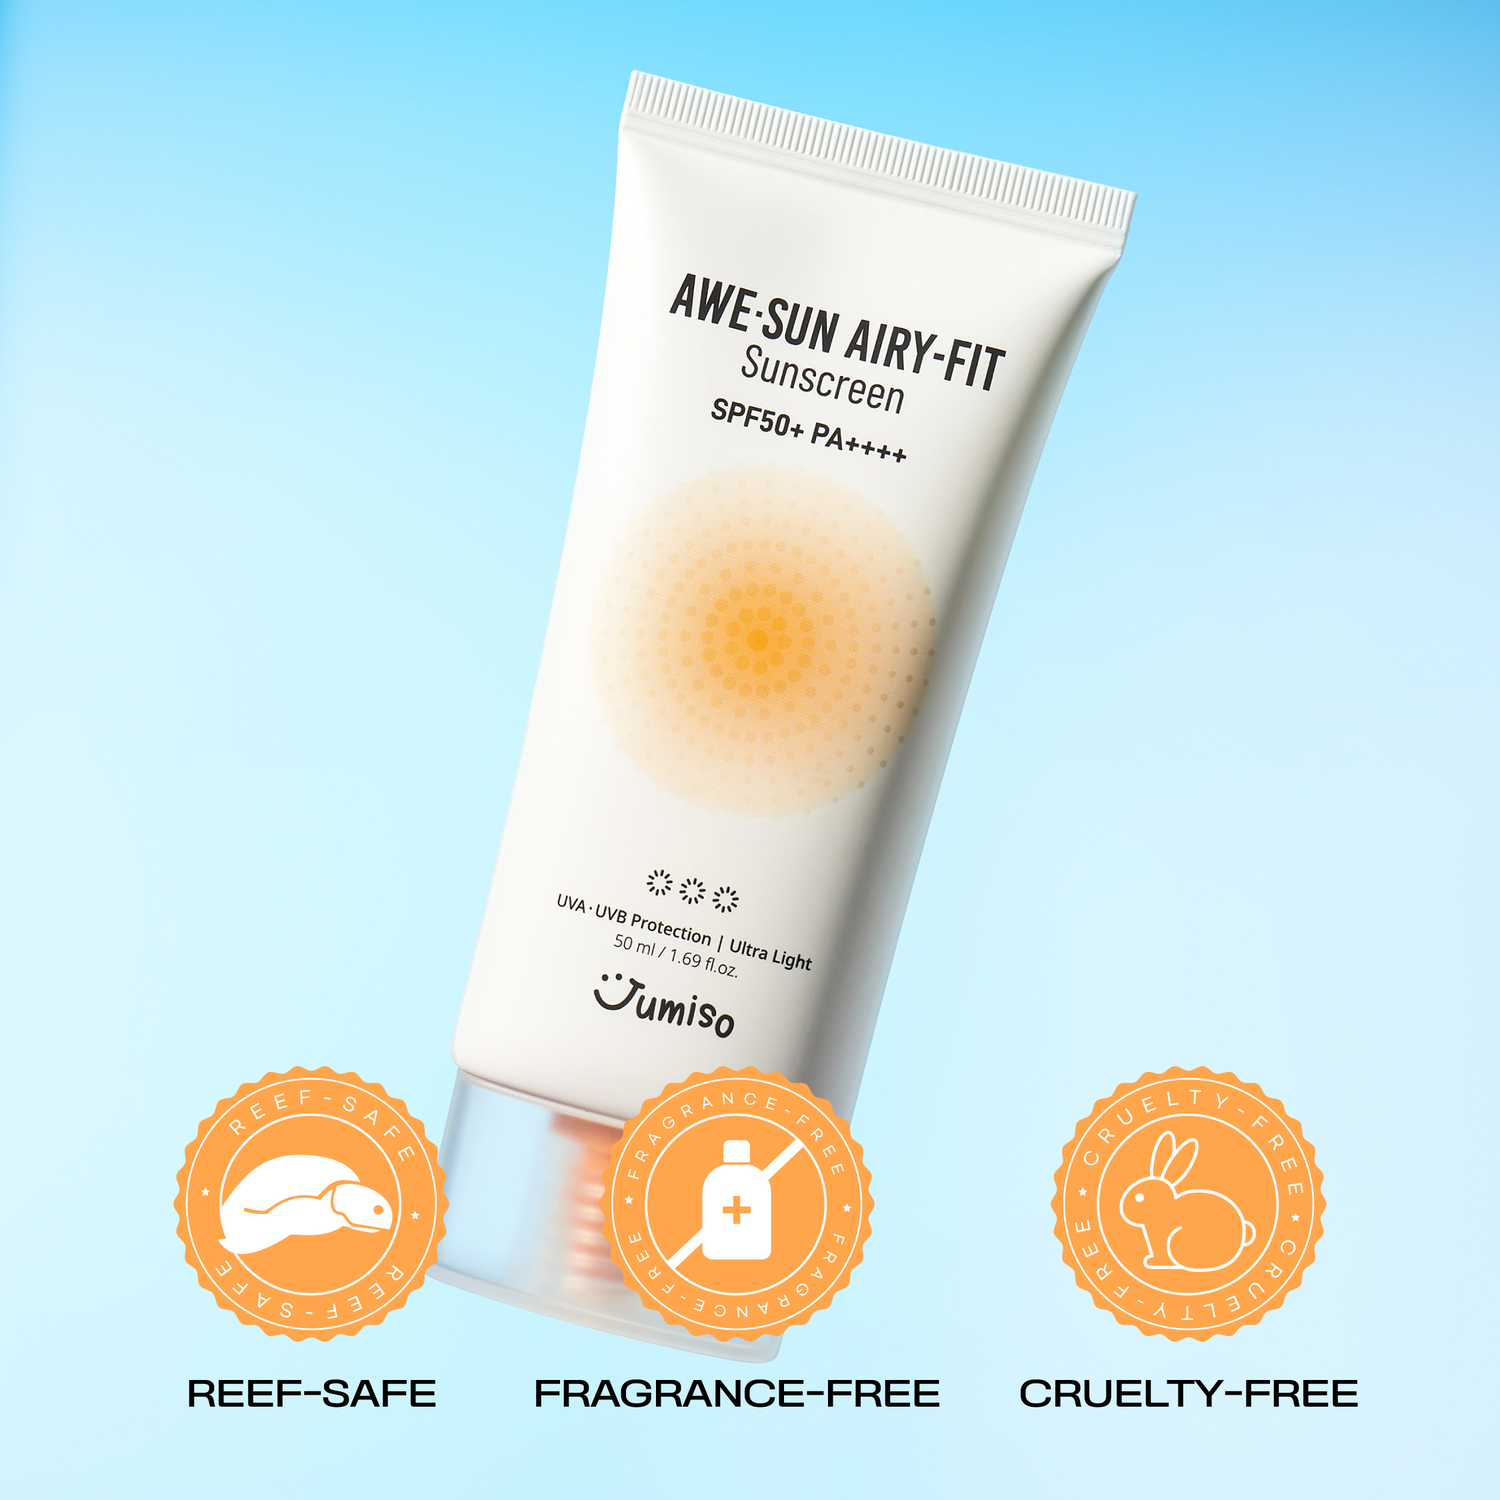 Awe Sun 1.0 Set (AWE-SUN AIRY-FIT Sunscreen + All Day Vitamin Pure C 5.5 Glow Serum)